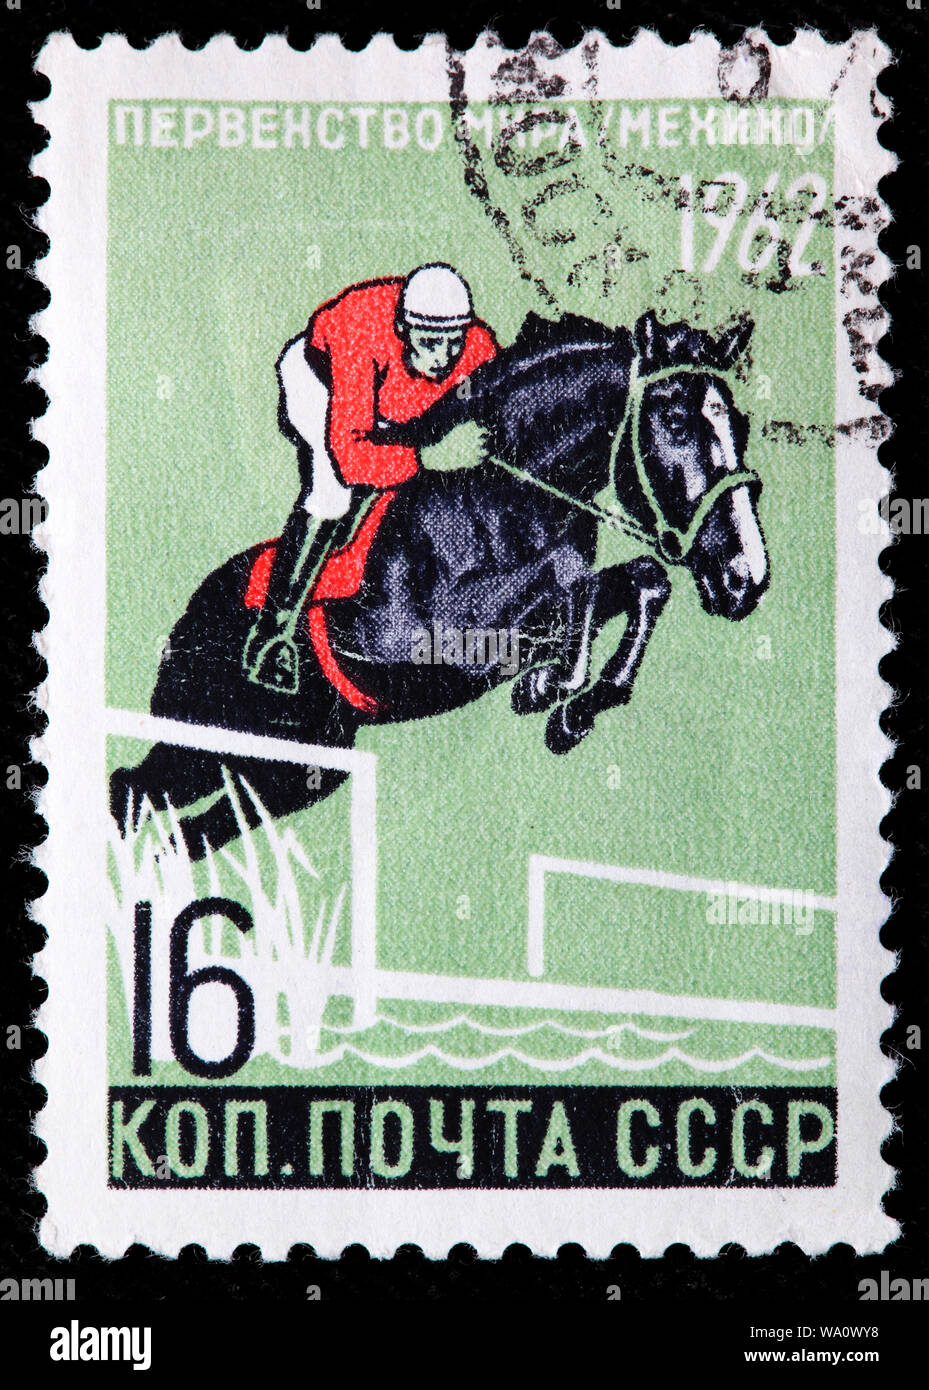 Modern pentathlon world championship, postage stamp, Russia, USSR, 1962 Stock Photo